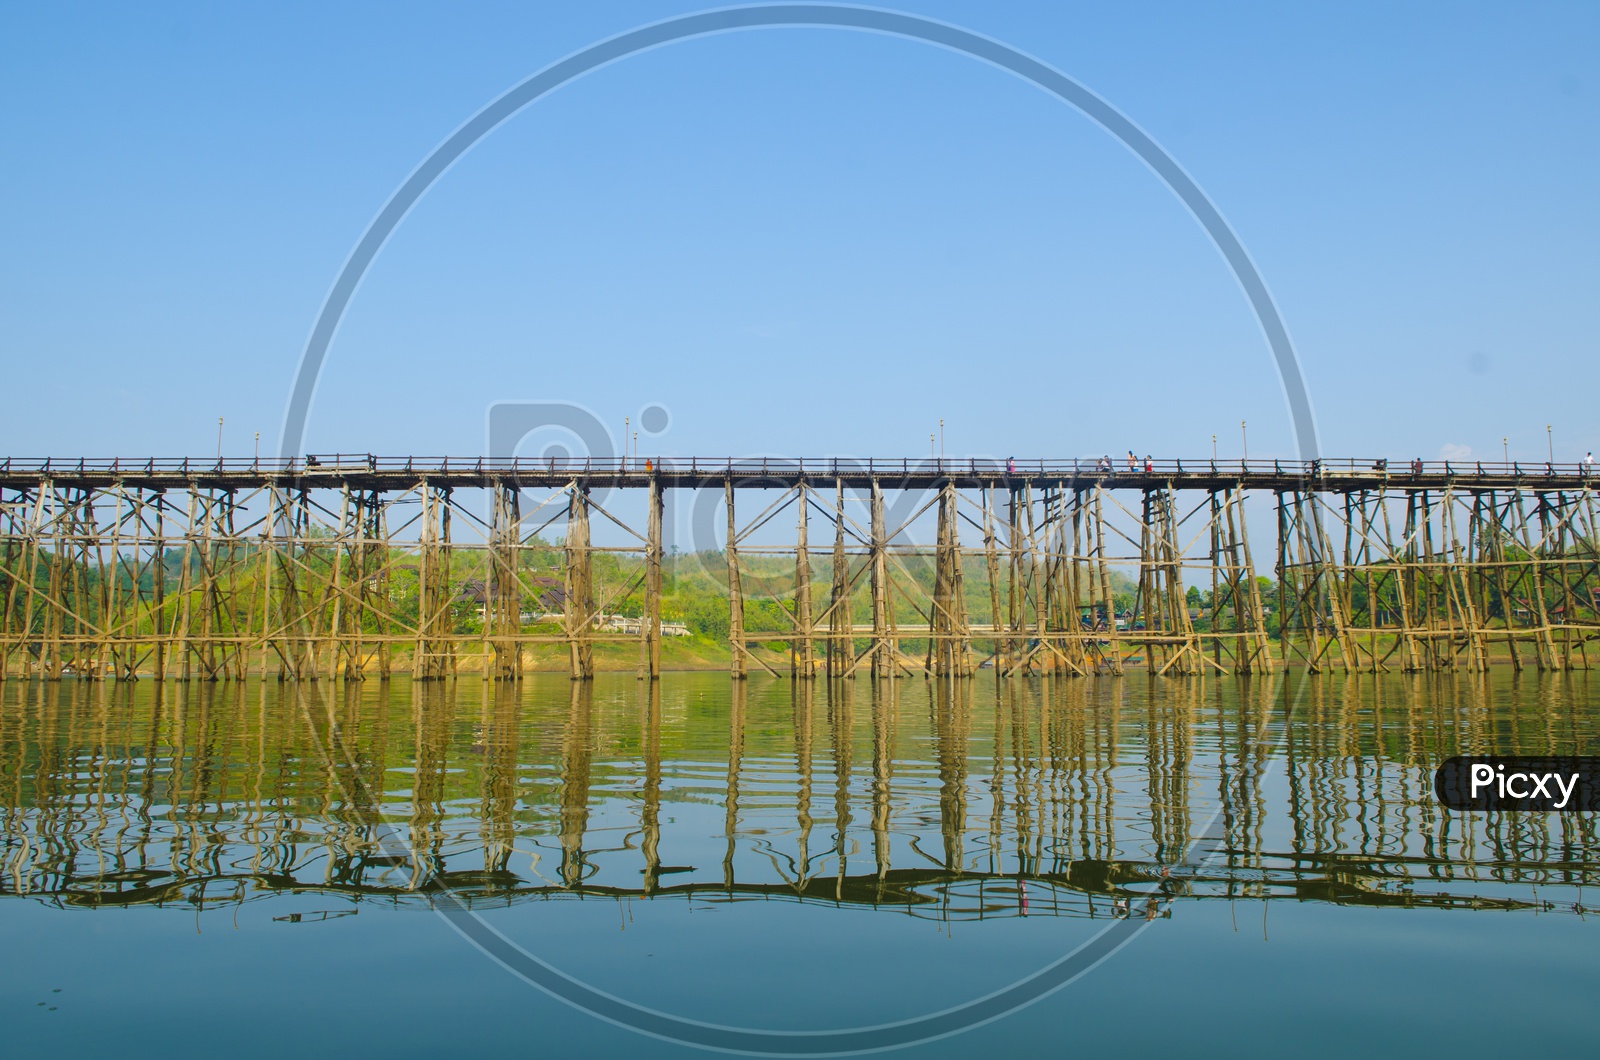 Mon Bridge or Wooden bridge In Sangkhla Buri  Over River Channel